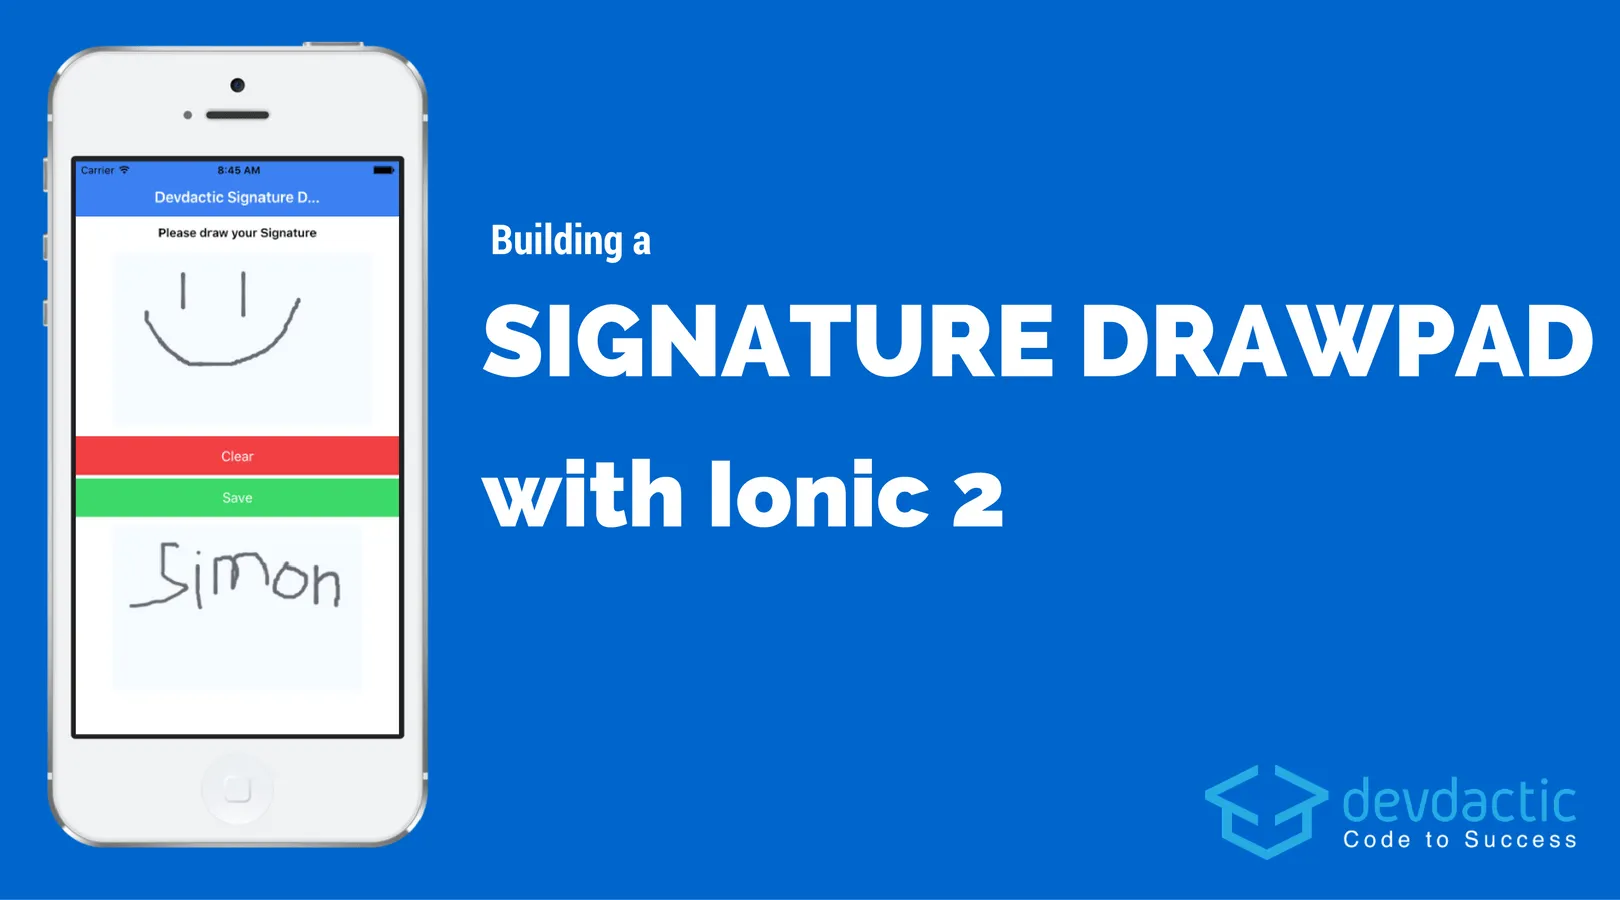 Building a Signature Drawpad using Ionic